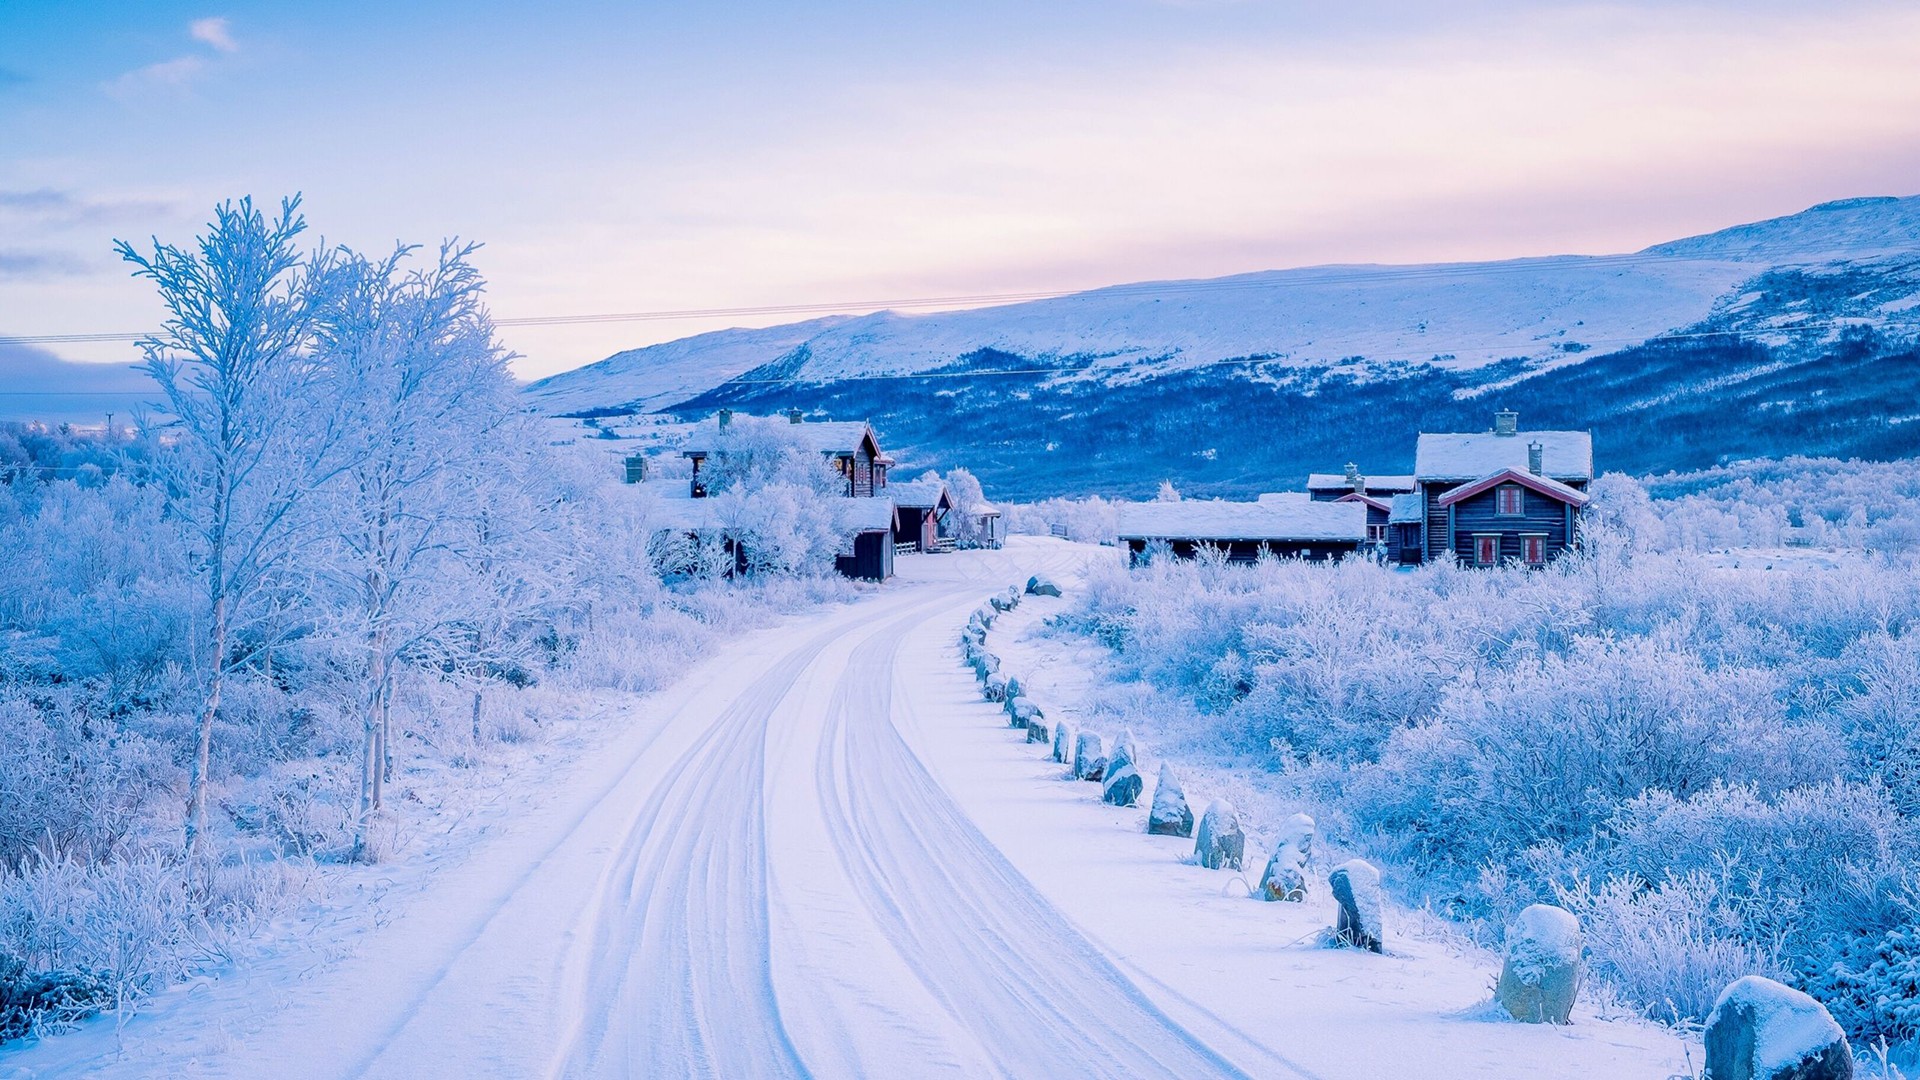 General 1920x1080 winter house road village hills landscape nordic landscapes nature outdoors cold ice